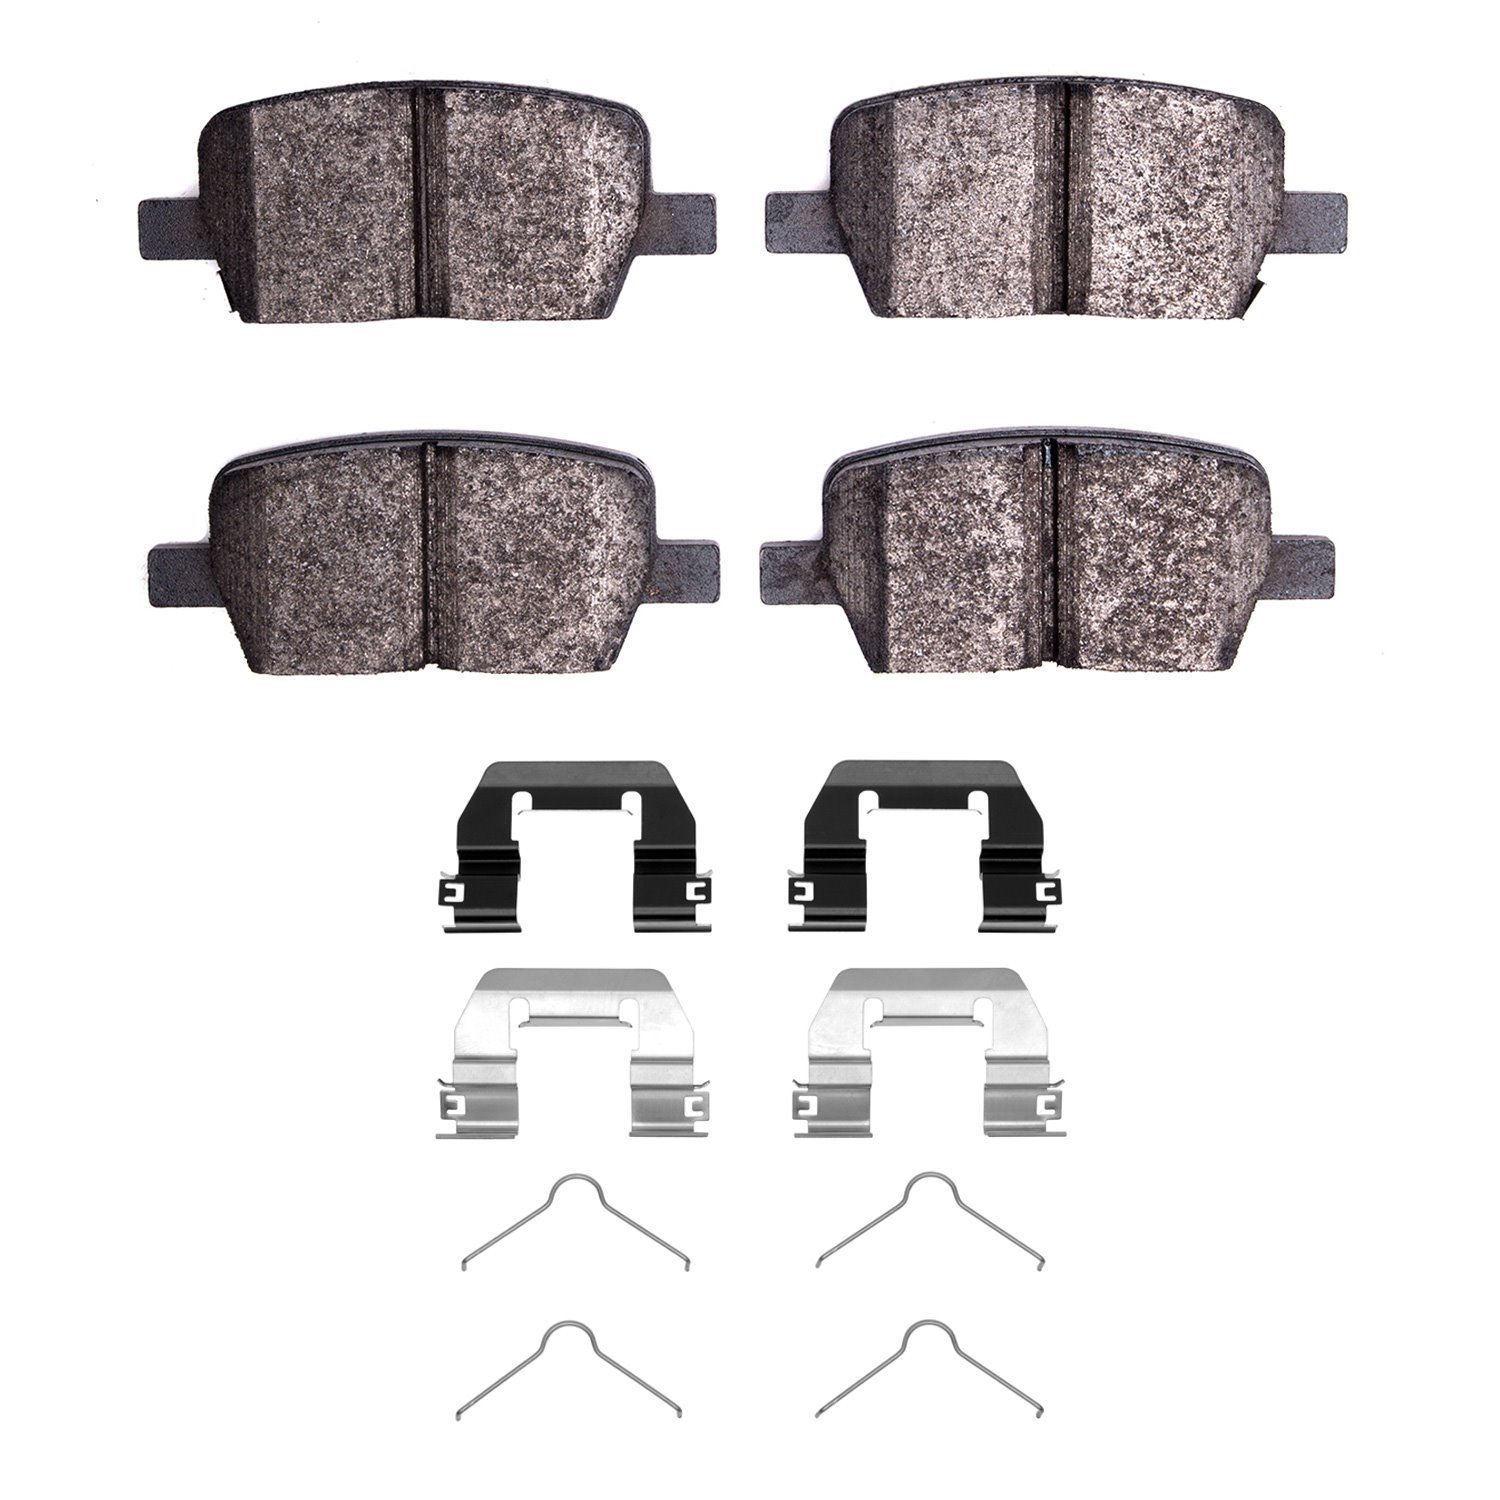 1552-1914-01 5000 Advanced Low-Metallic Brake Pads & Hardware Kit, Fits Select GM, Position: Rear